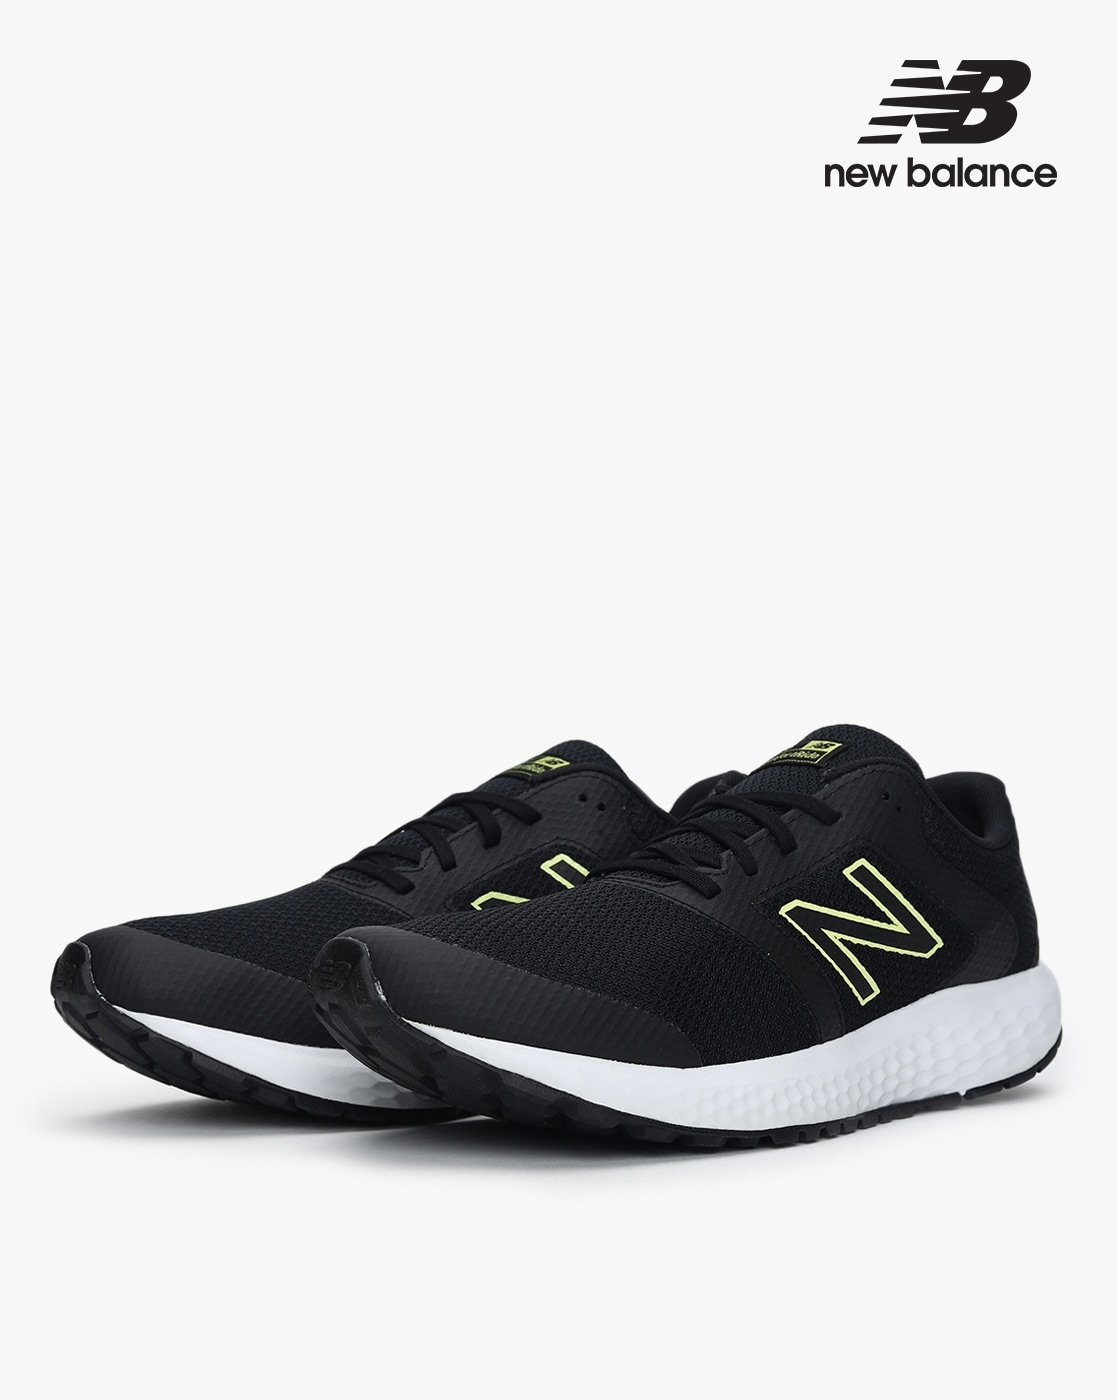 mens new balance running shoes black